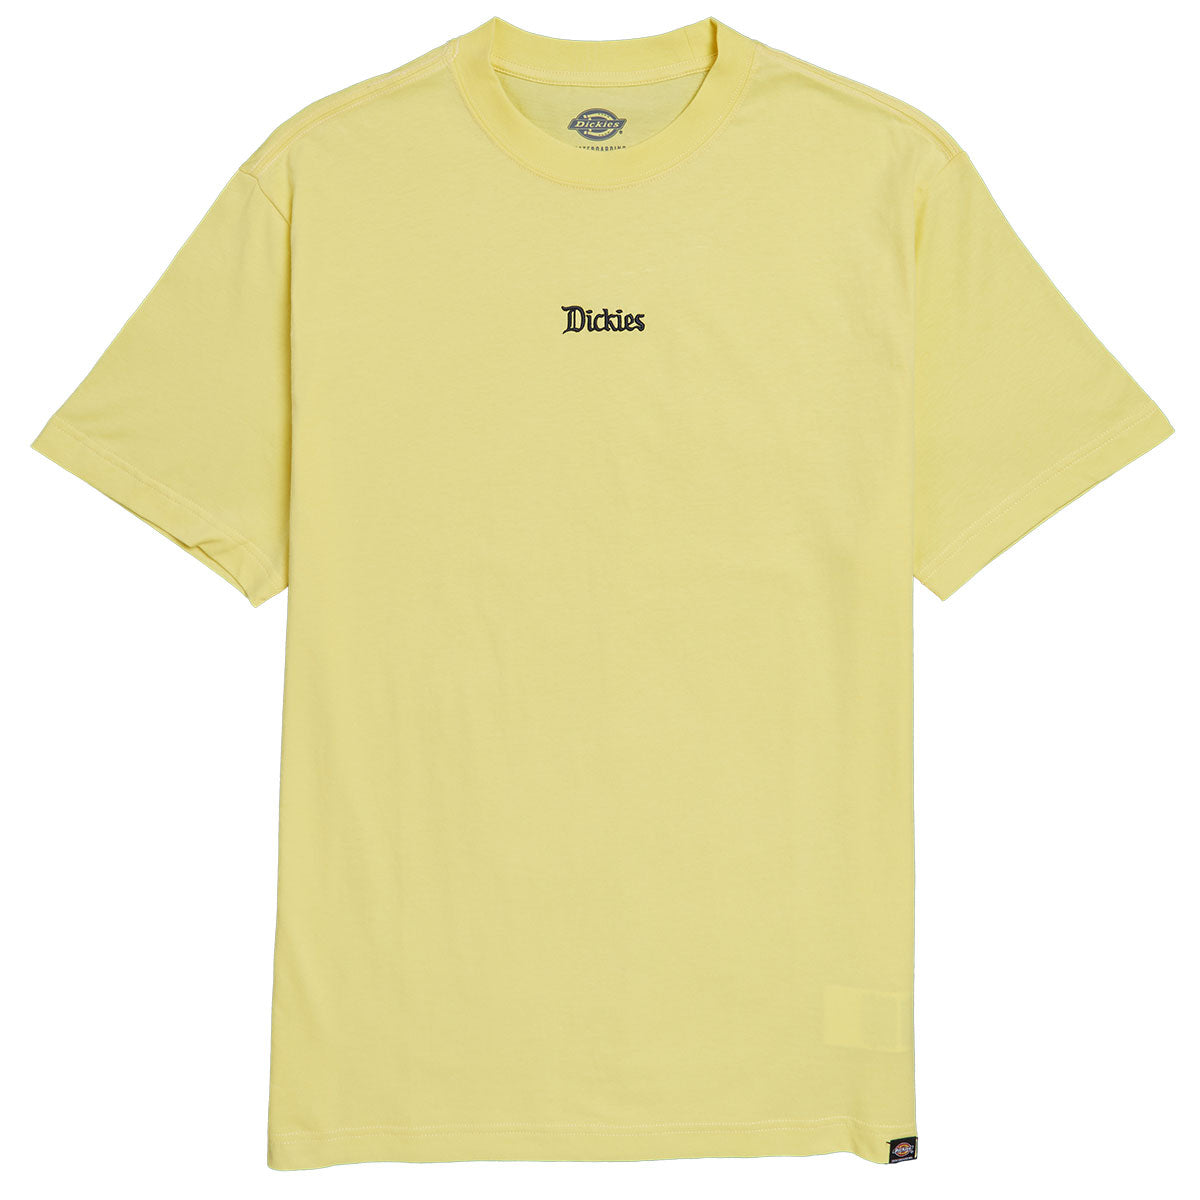 Dickies Guy Mariano Embroidered T-Shirt - Yellow Cream image 1